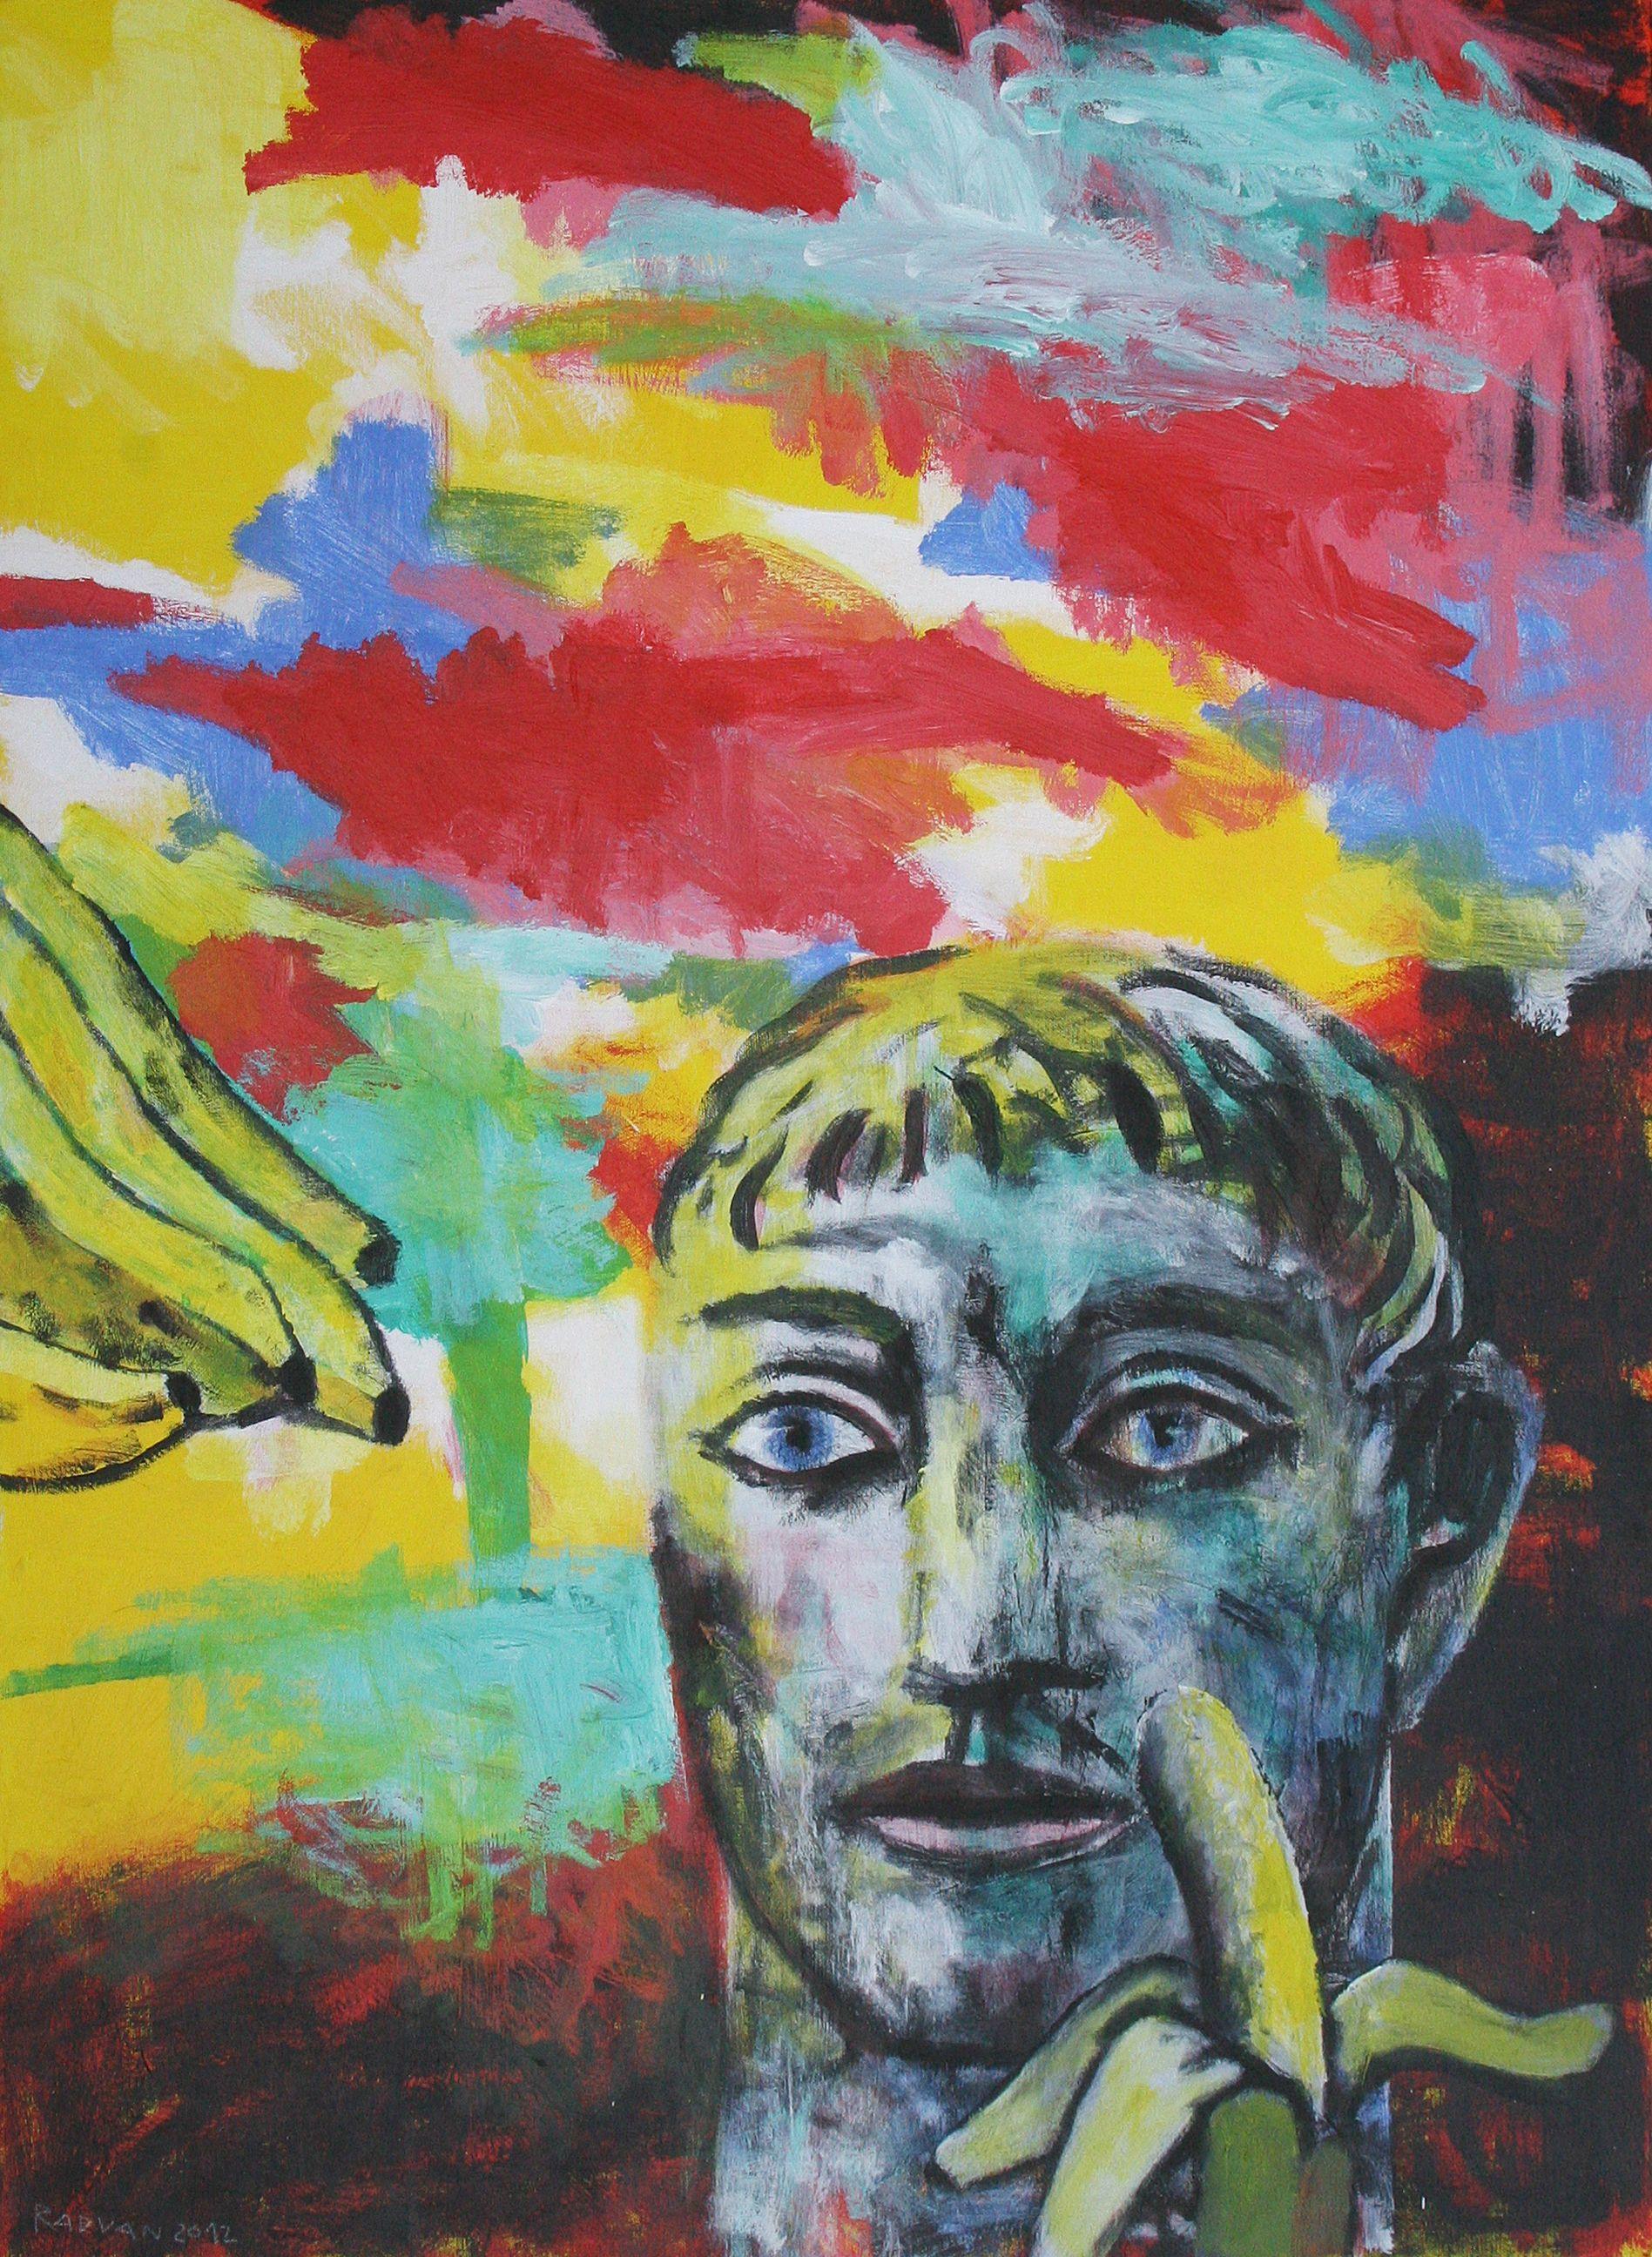 Banana - Contemporary Art, Red, Yellow, Blue, Portrait, Figurative Art, Hero